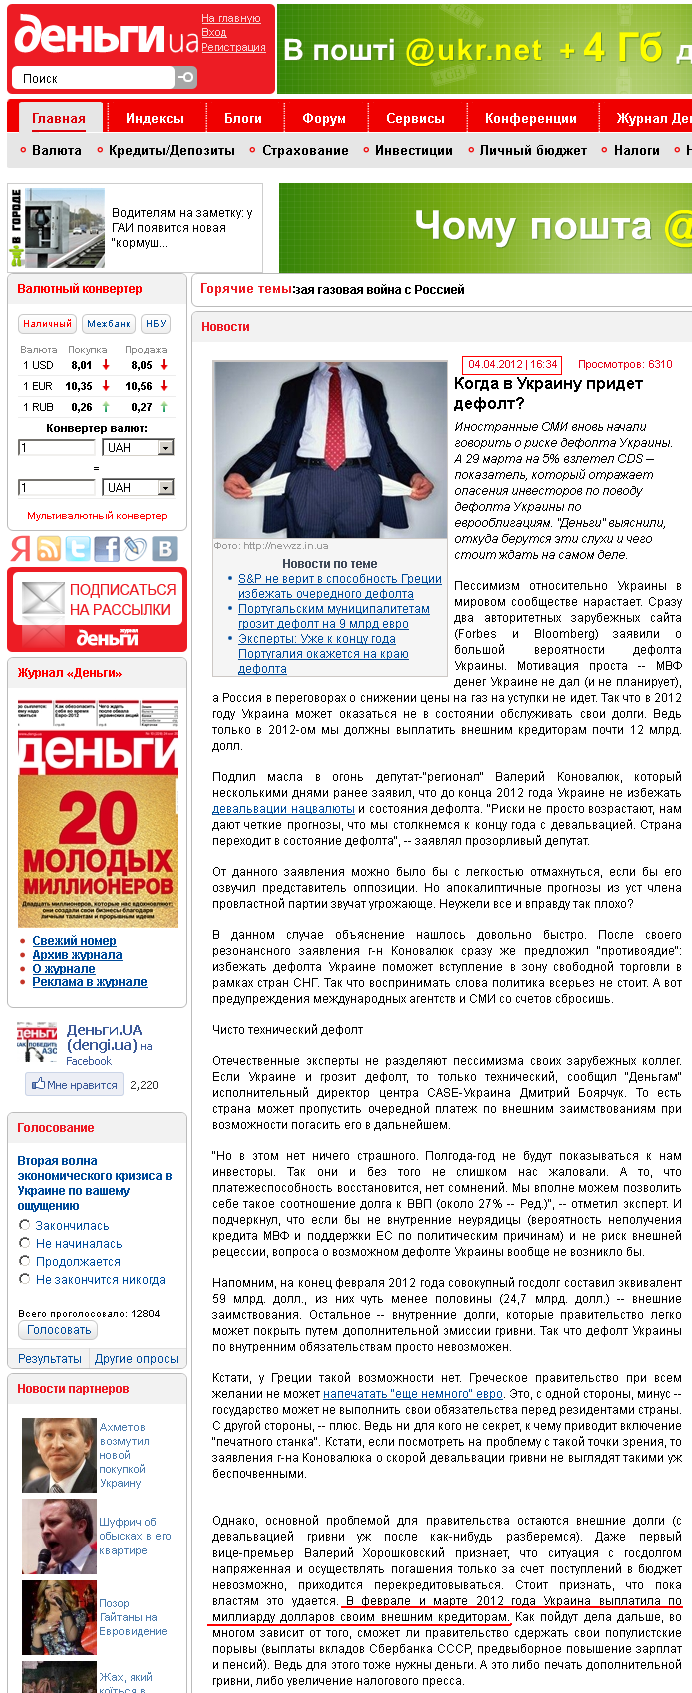 http://dengi.ua/clauses/96463_Kogda_v_Ukrainu_pridet_defolt.html